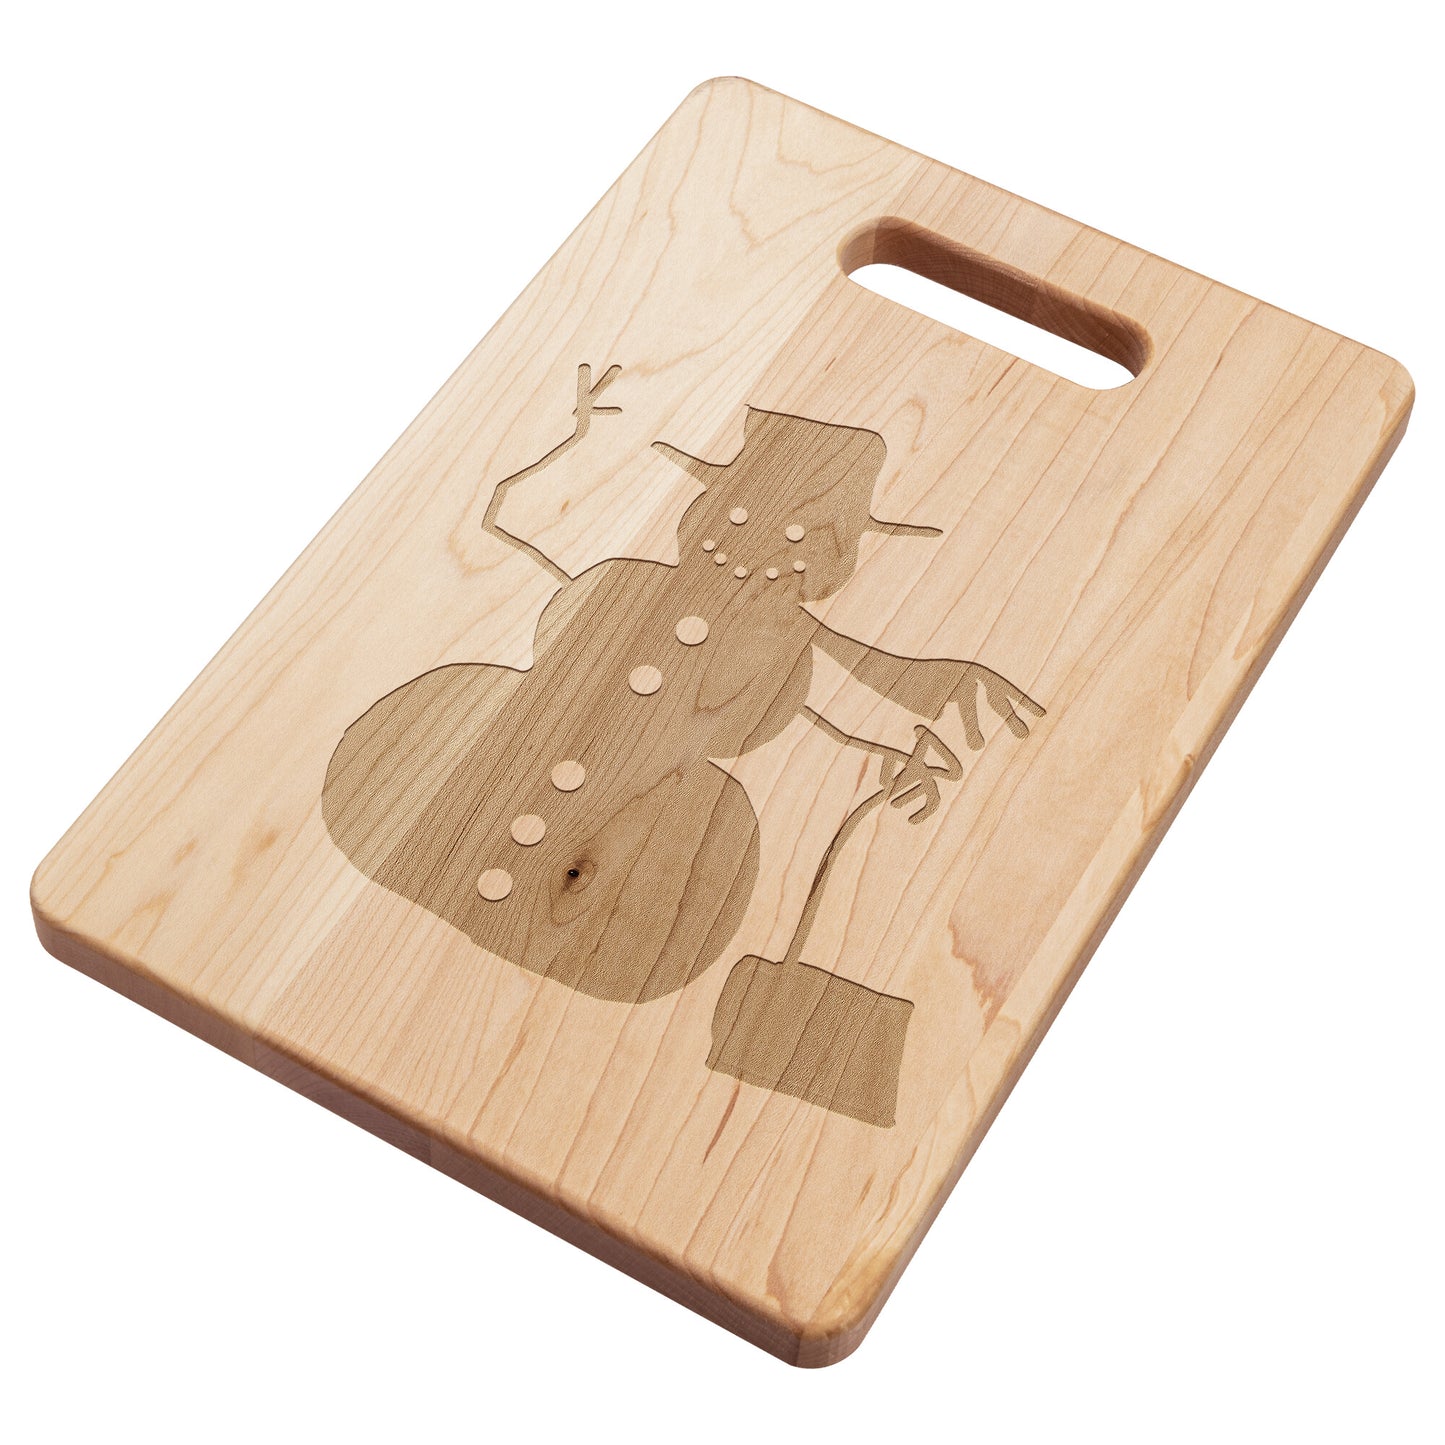 Waving Snowman Maple Cutting Board